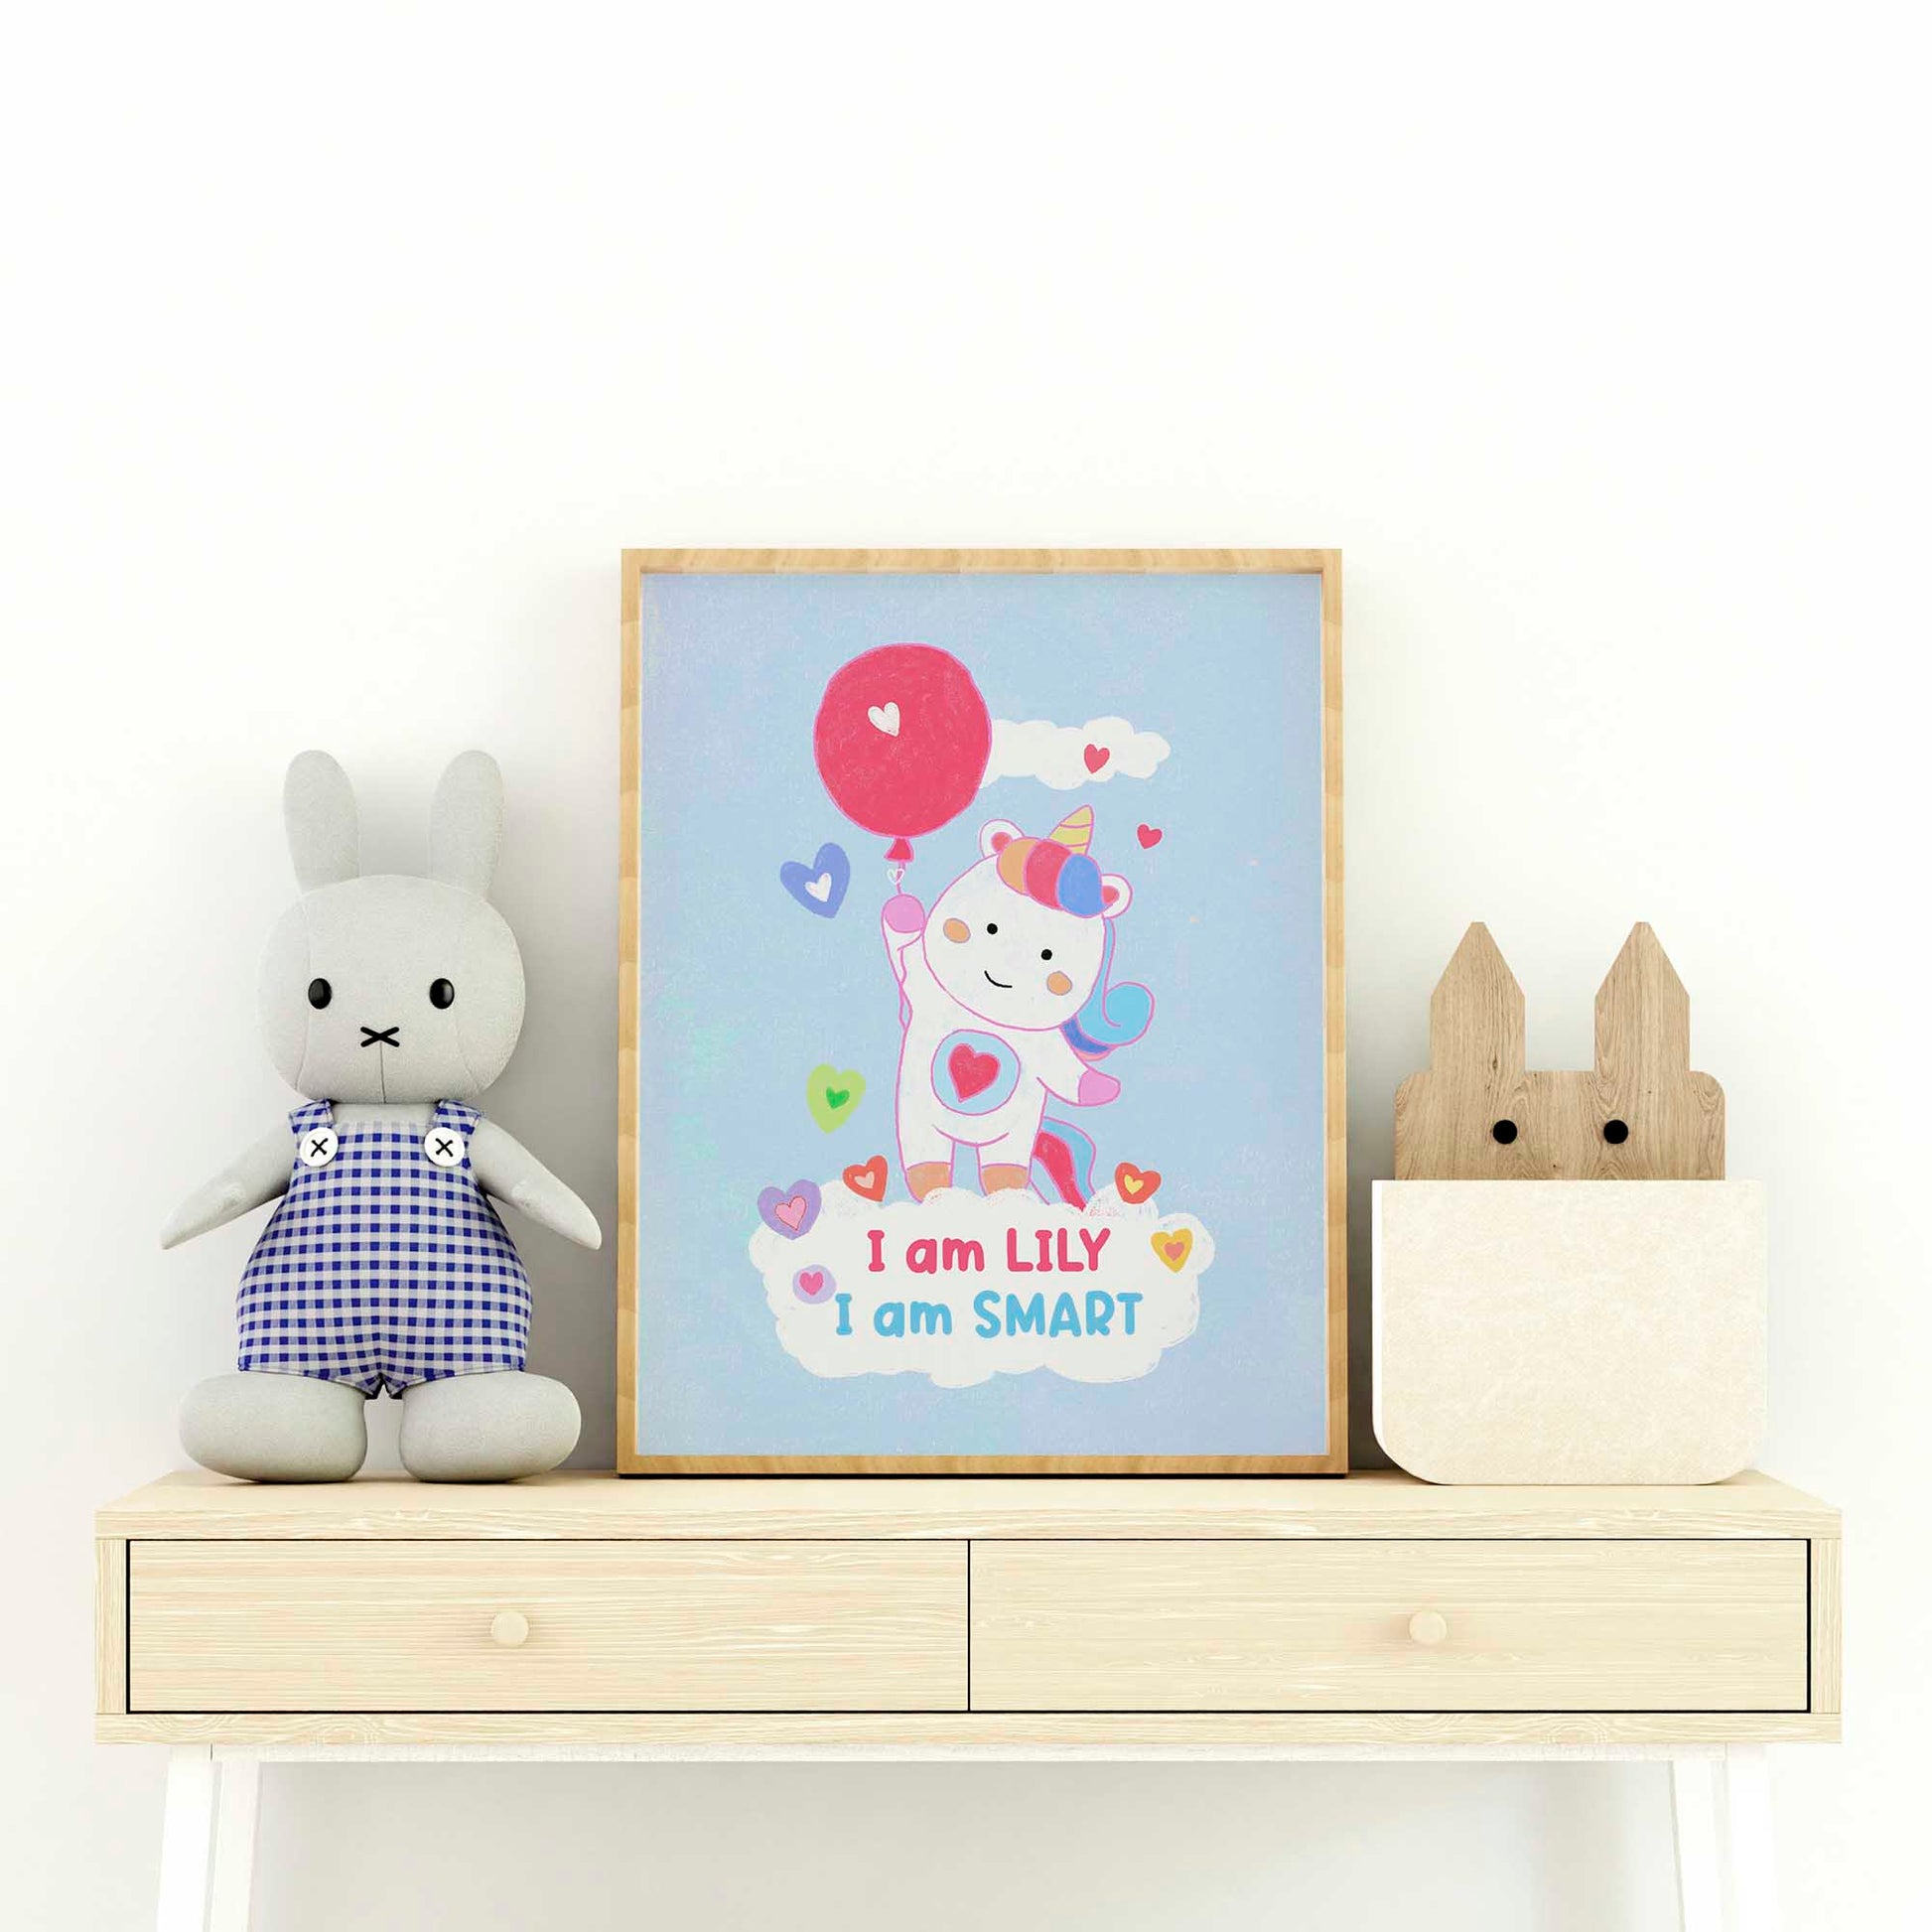 "Girl's nursery enhanced with unicorn framed art, combining kids' wall art with empowering sayings."